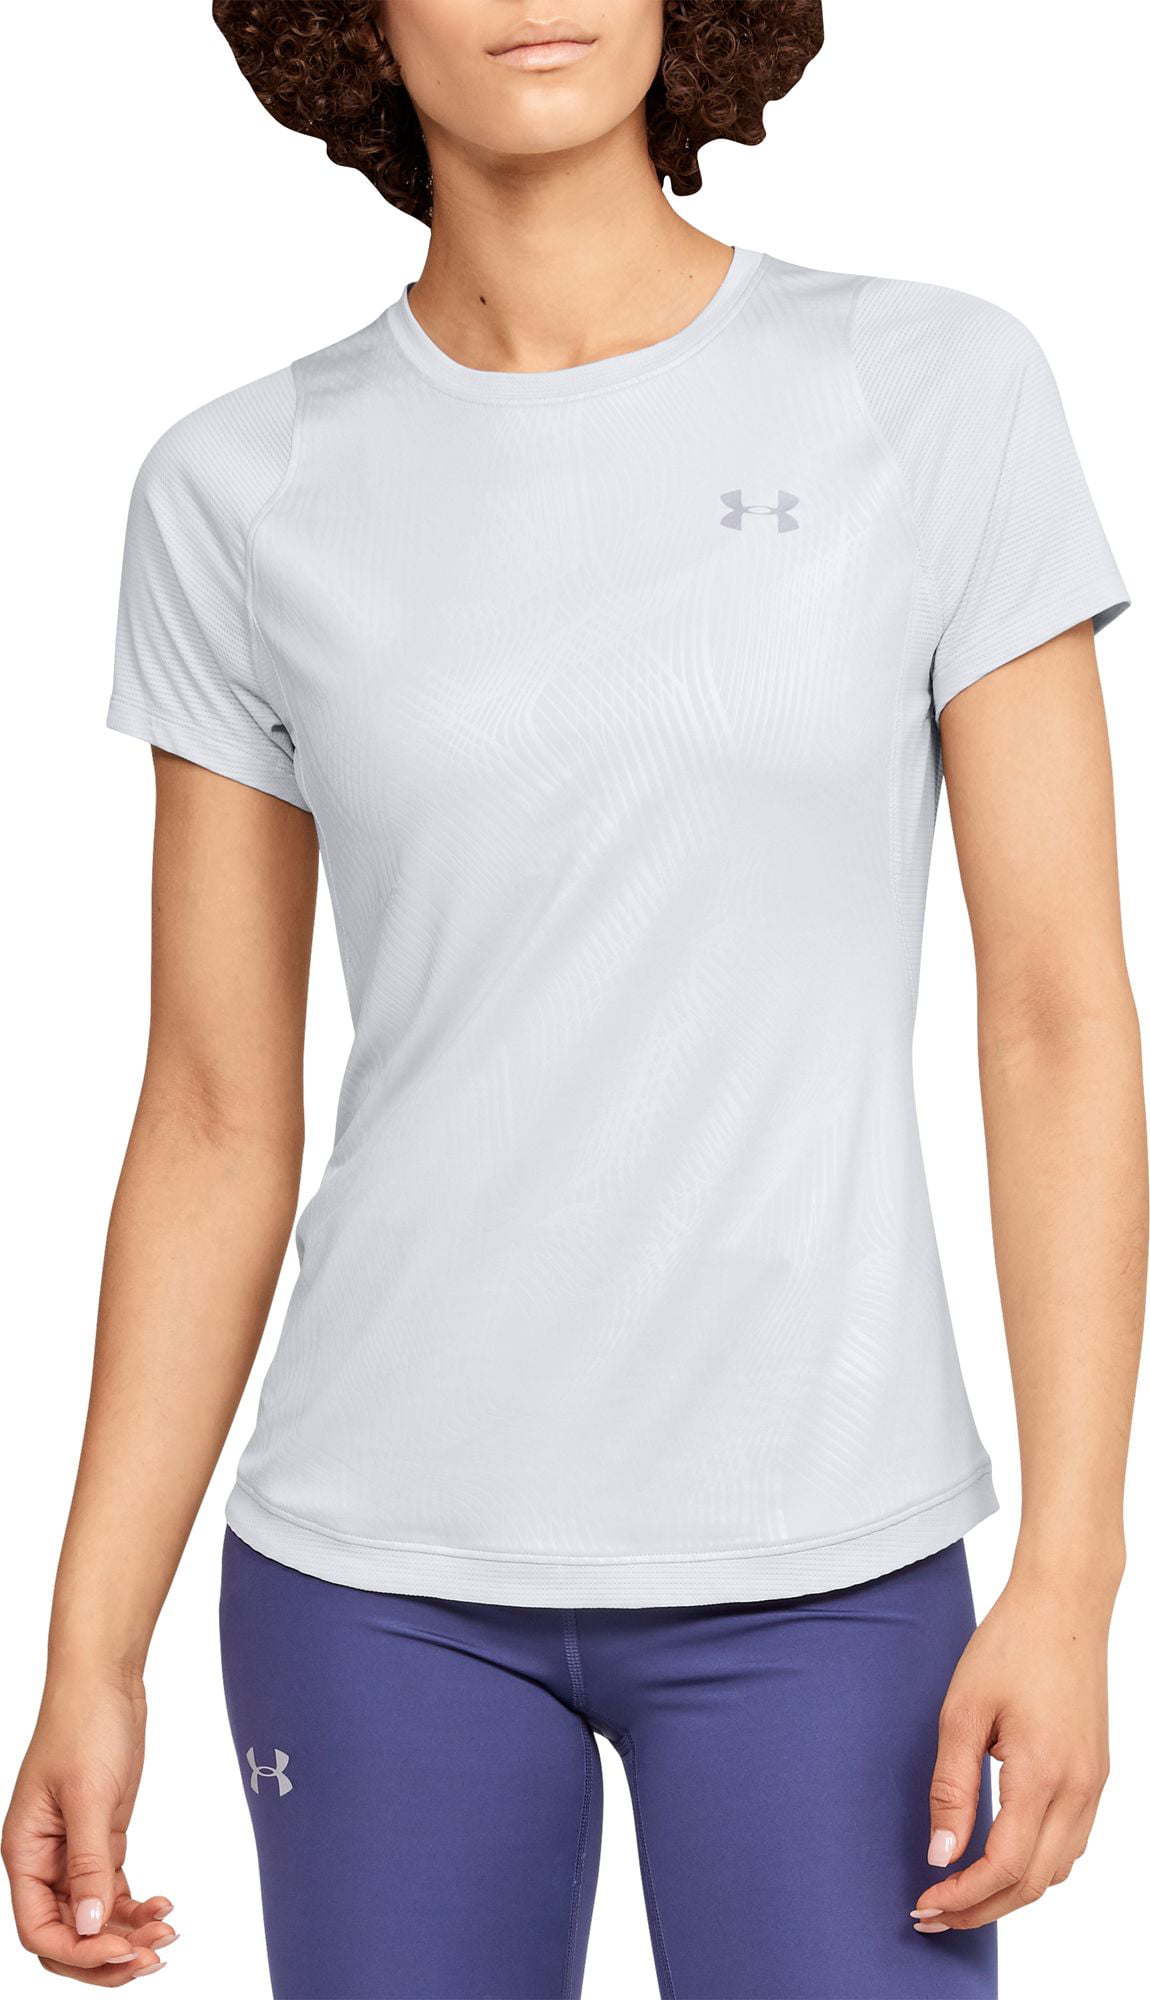 Under Armour Women's Qualifier Iso-chill Short Sleeve Running T-Shirt Short Sleeve